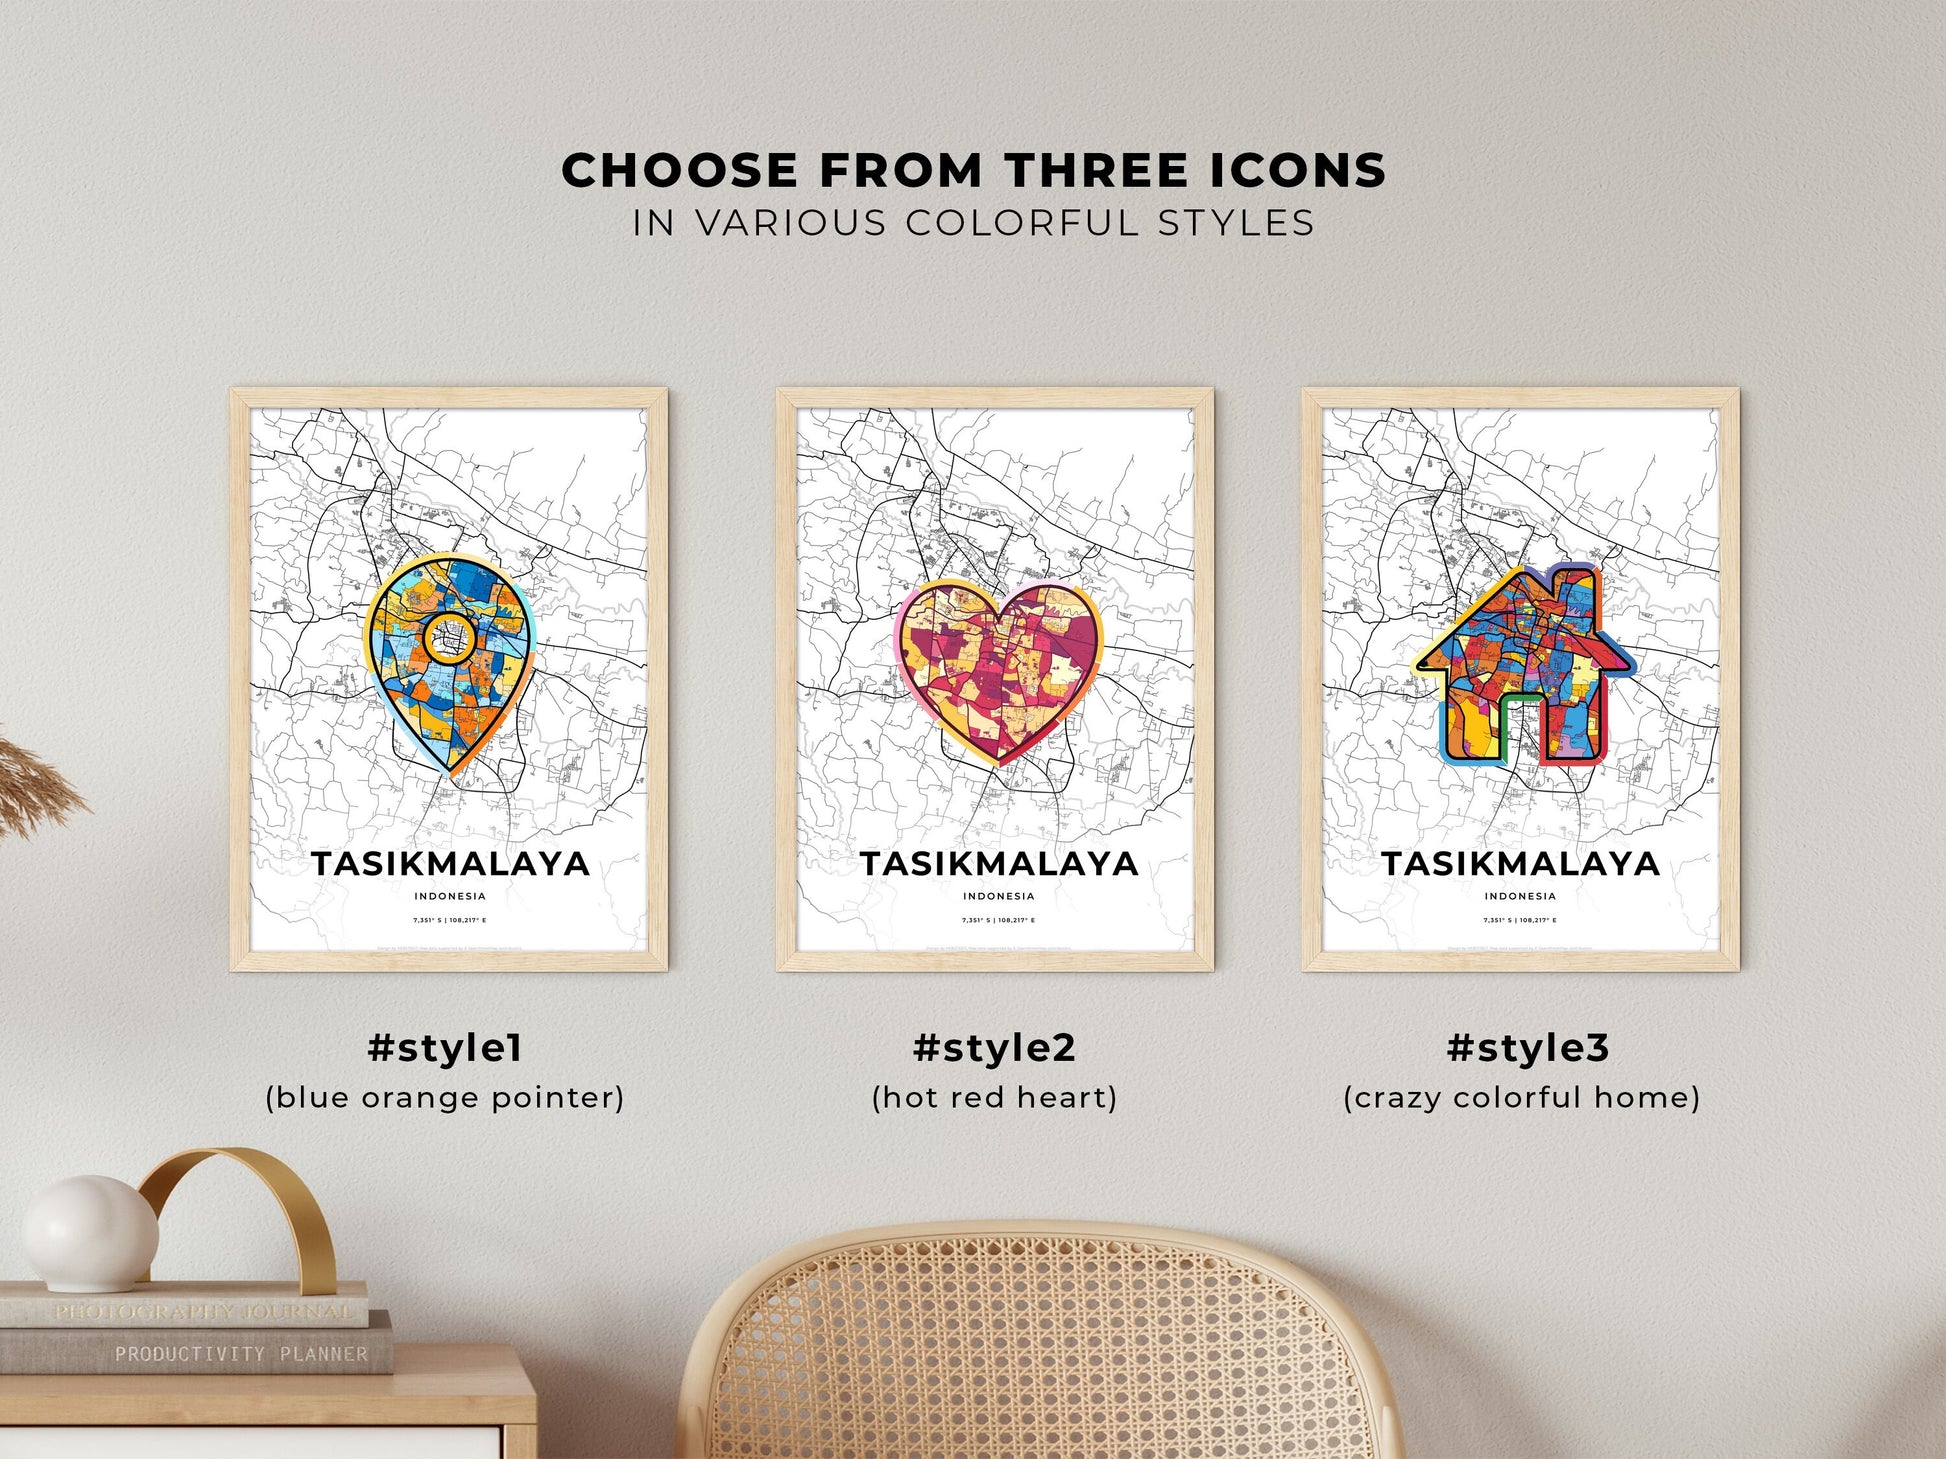 TASIKMALAYA INDONESIA minimal art map with a colorful icon.